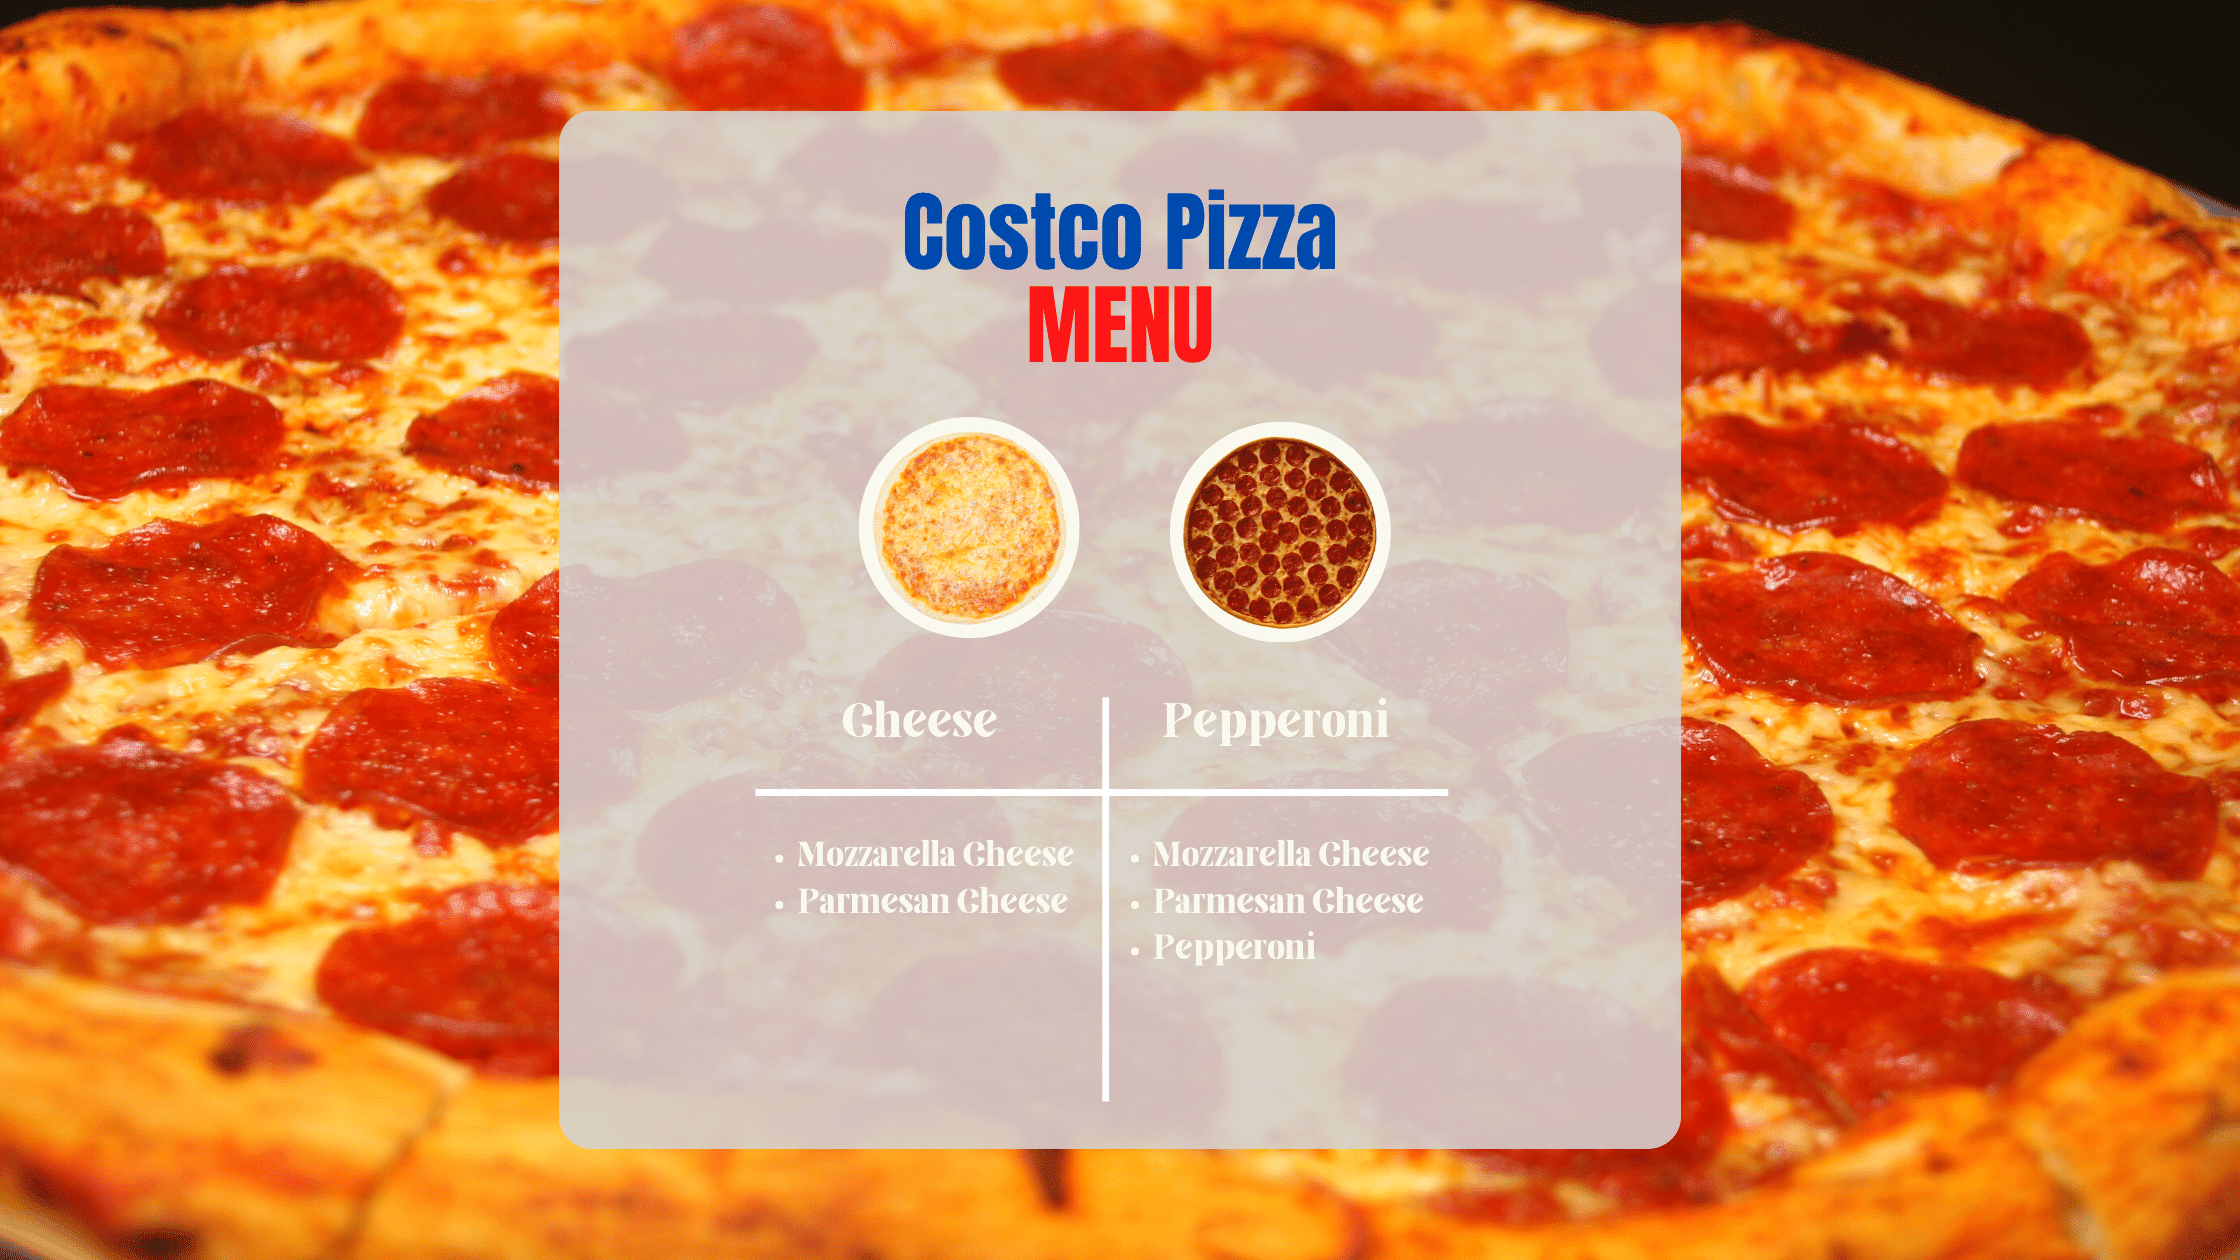 Costco Pizza Menu in 2022 – No One Can Beat It!